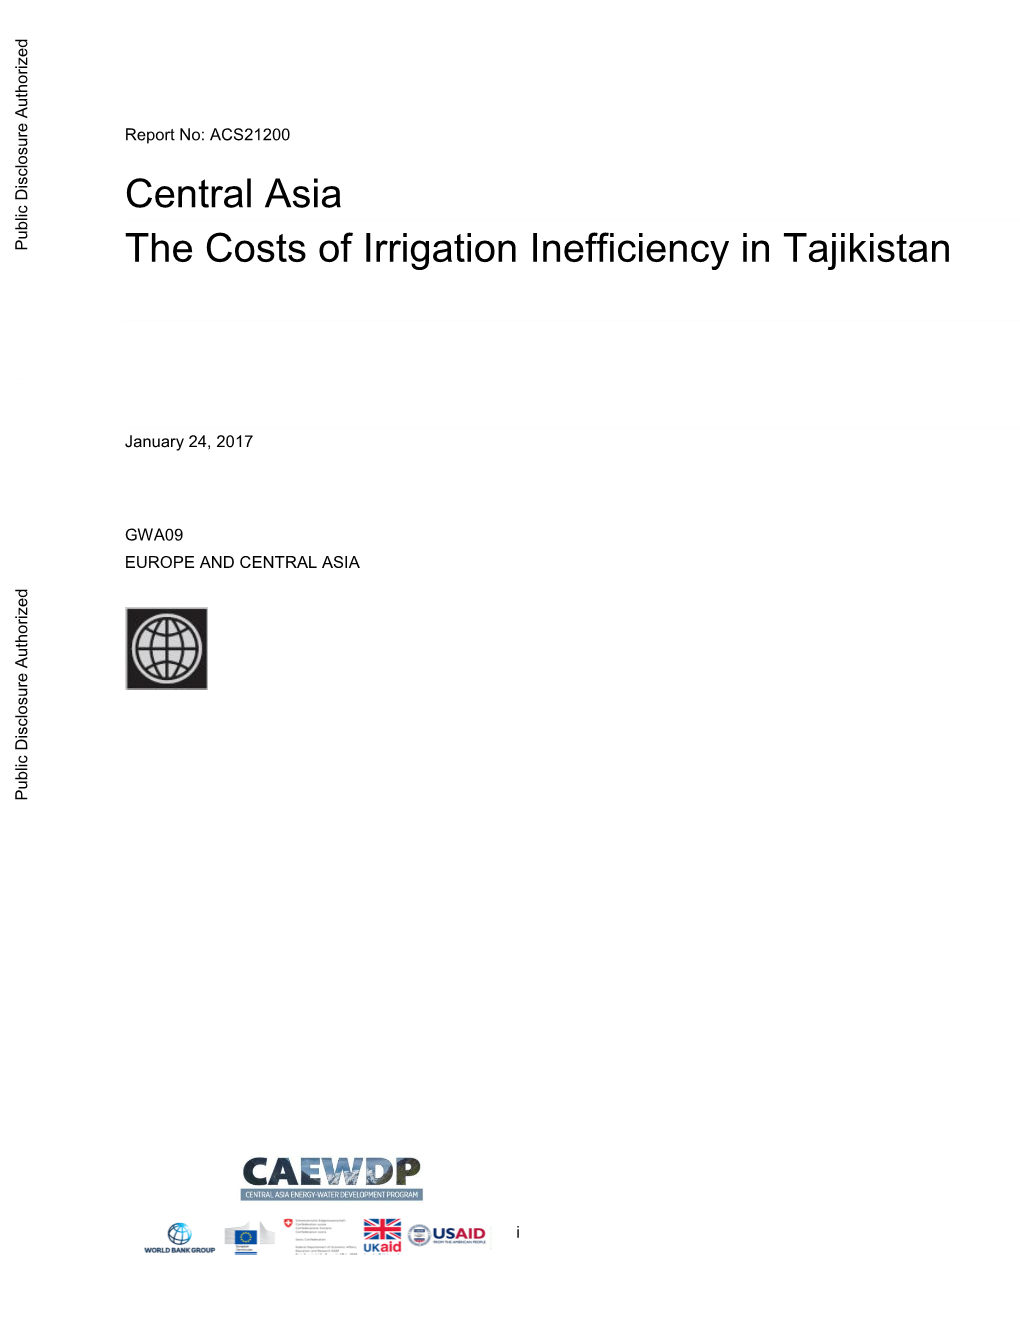 Costs of Irrigation Inefficiency in Tajikistan